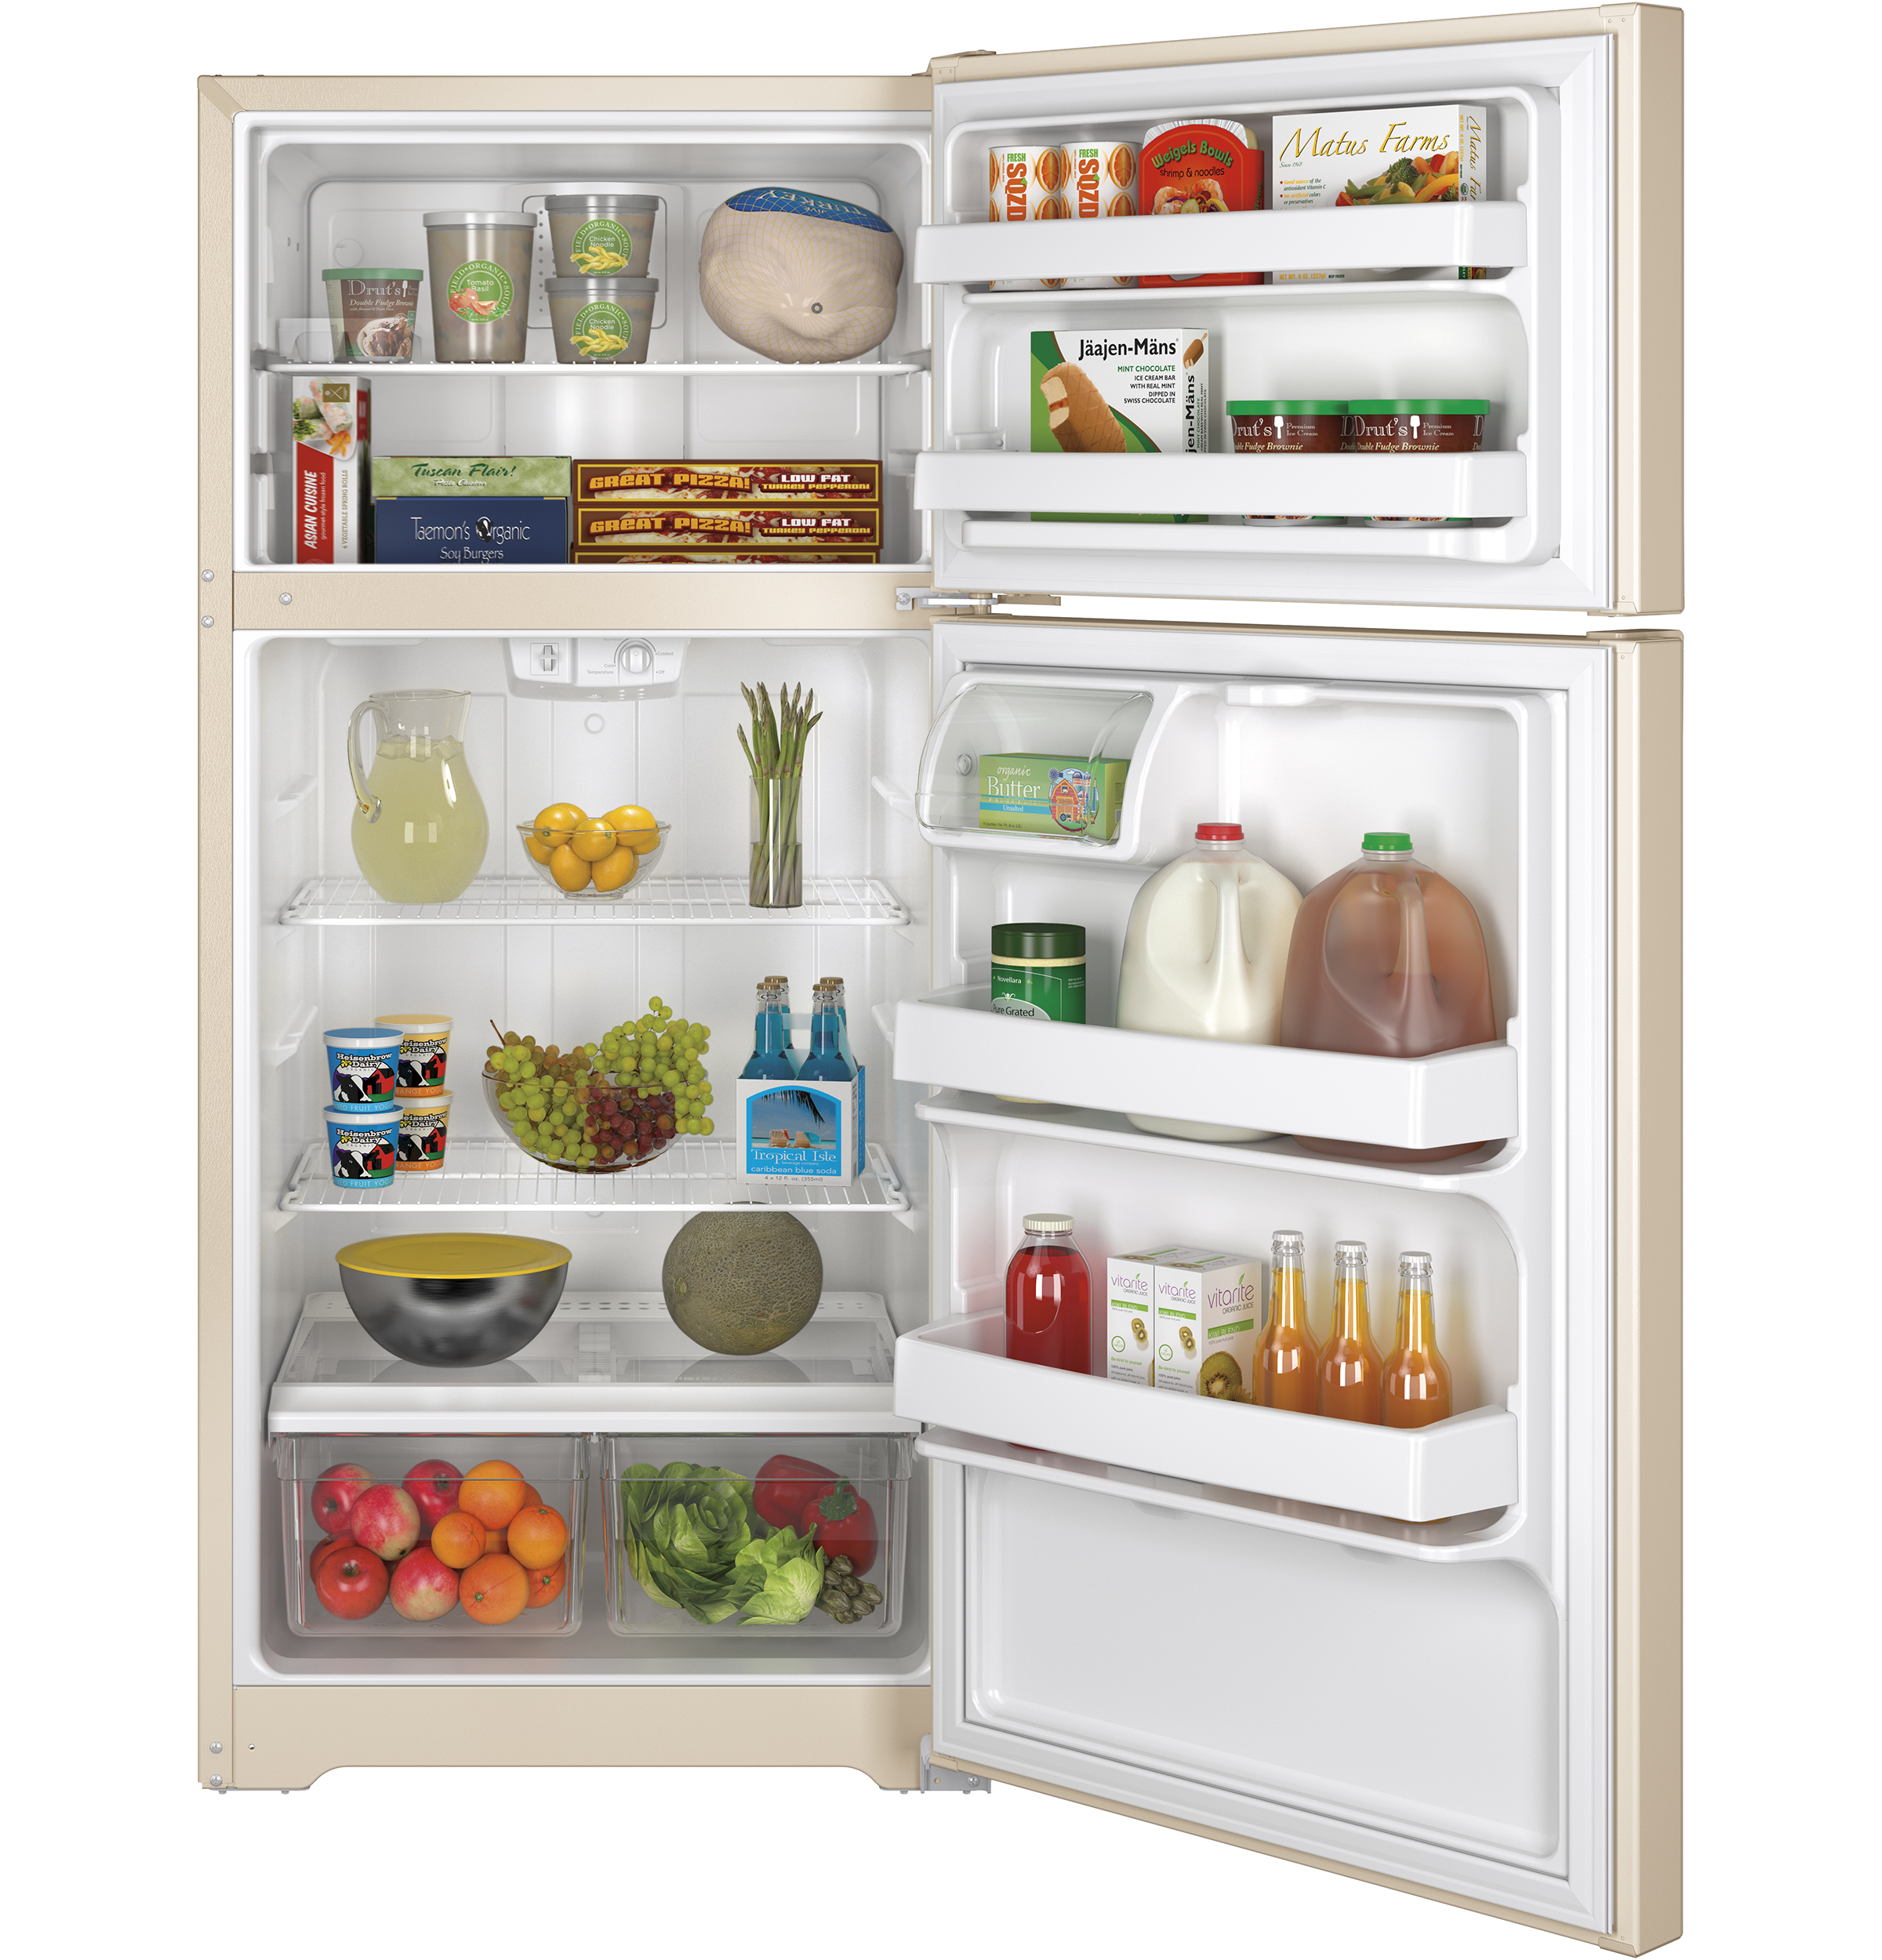  GE - 14.6 Cu. Ft. Top-Freezer Refrigerator